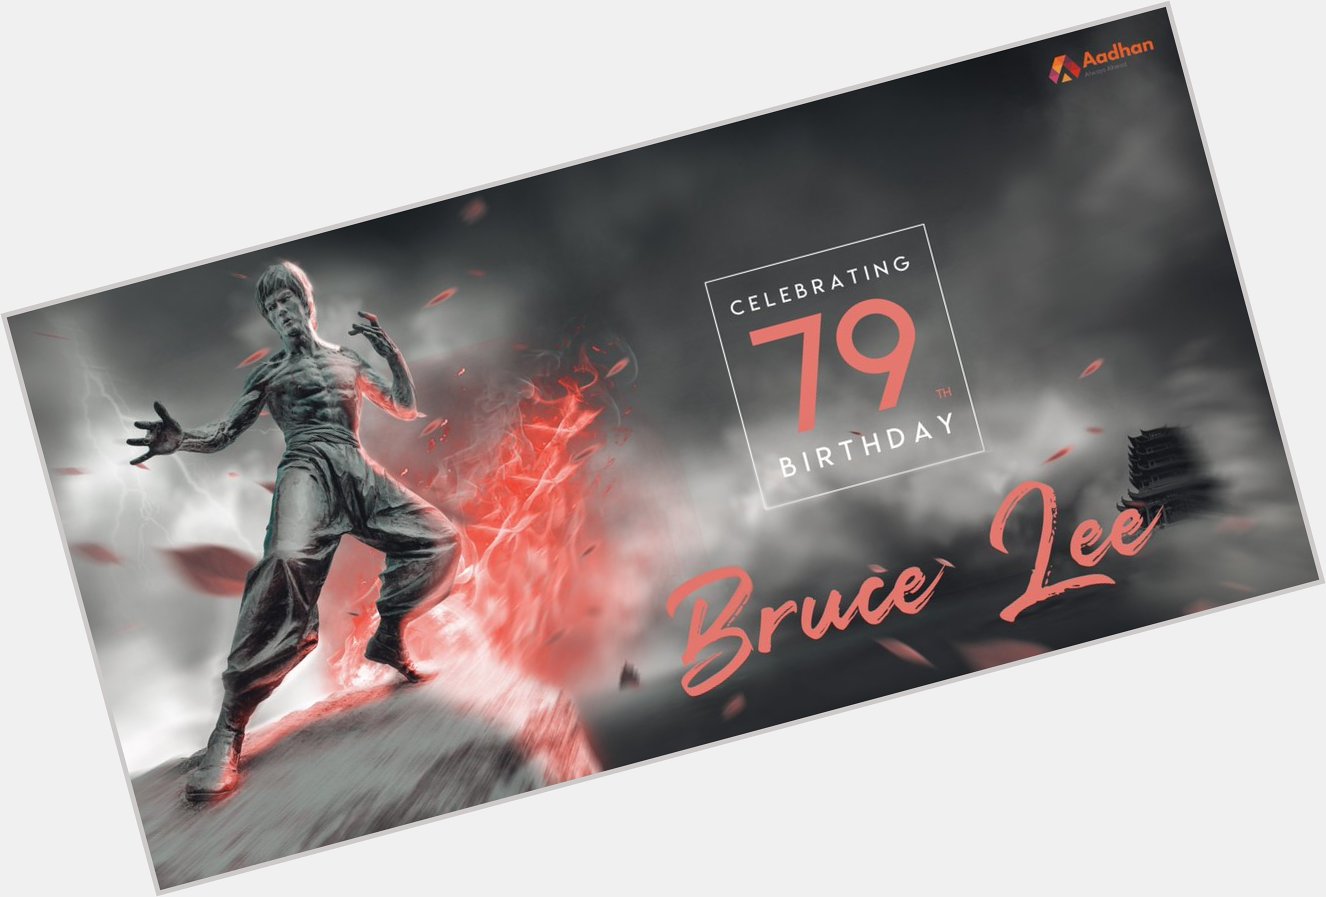 Happy Birthday Bruce Lee 